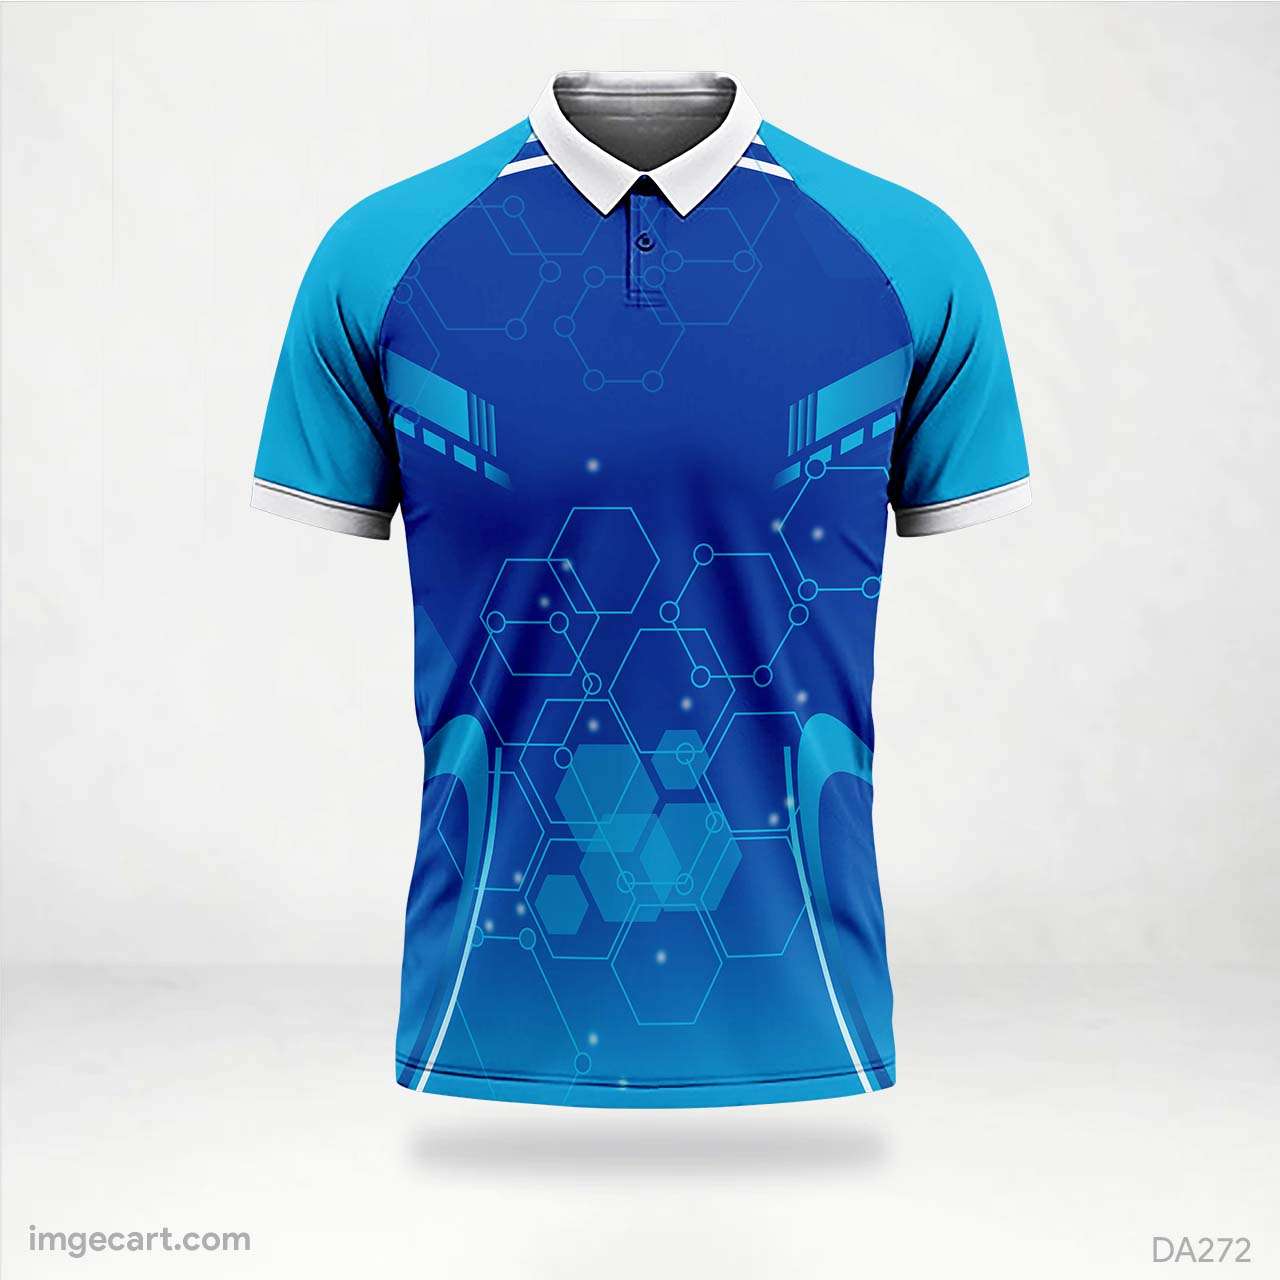 Cricket Jersey Design Blue with Pattern - imgecart